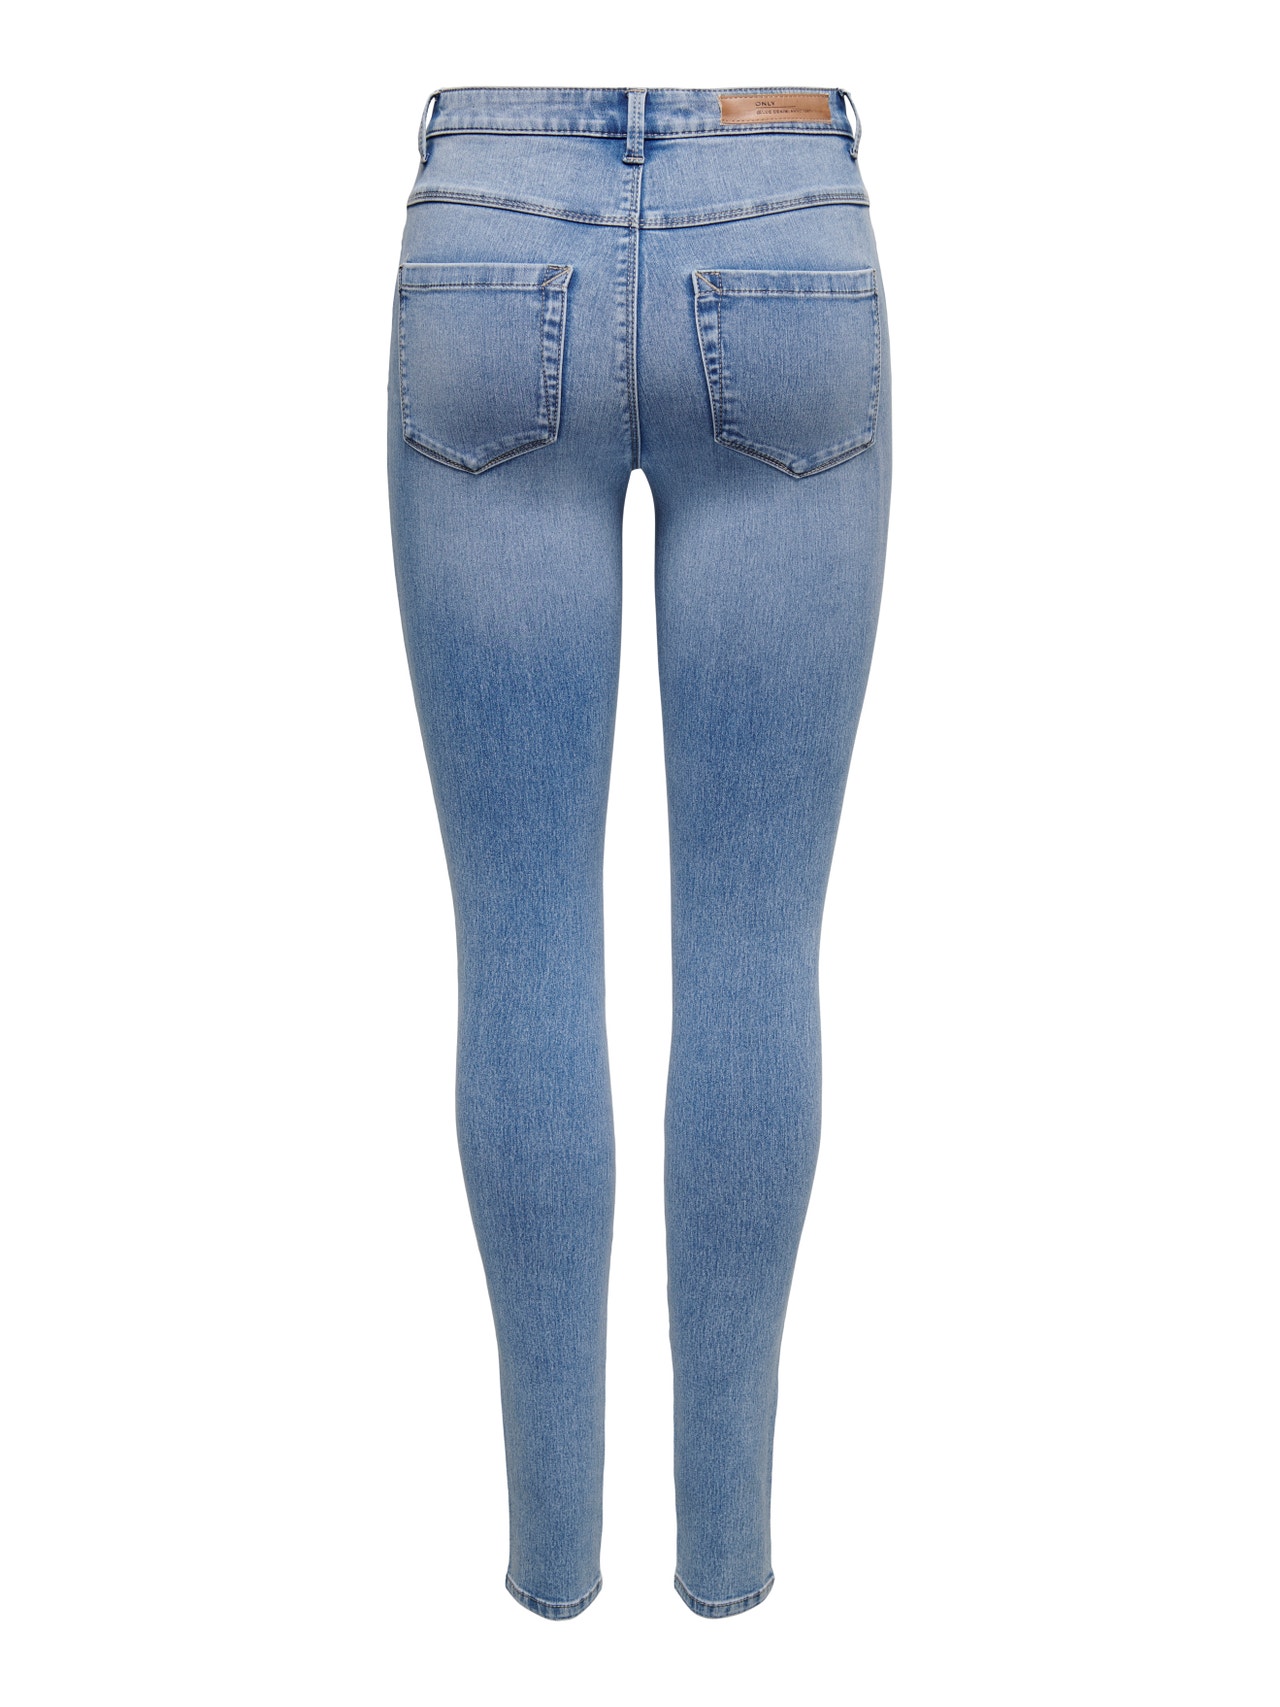 ONLY Skinny Fit Høy midje Petite Jeans -Light Blue Denim - 15295883